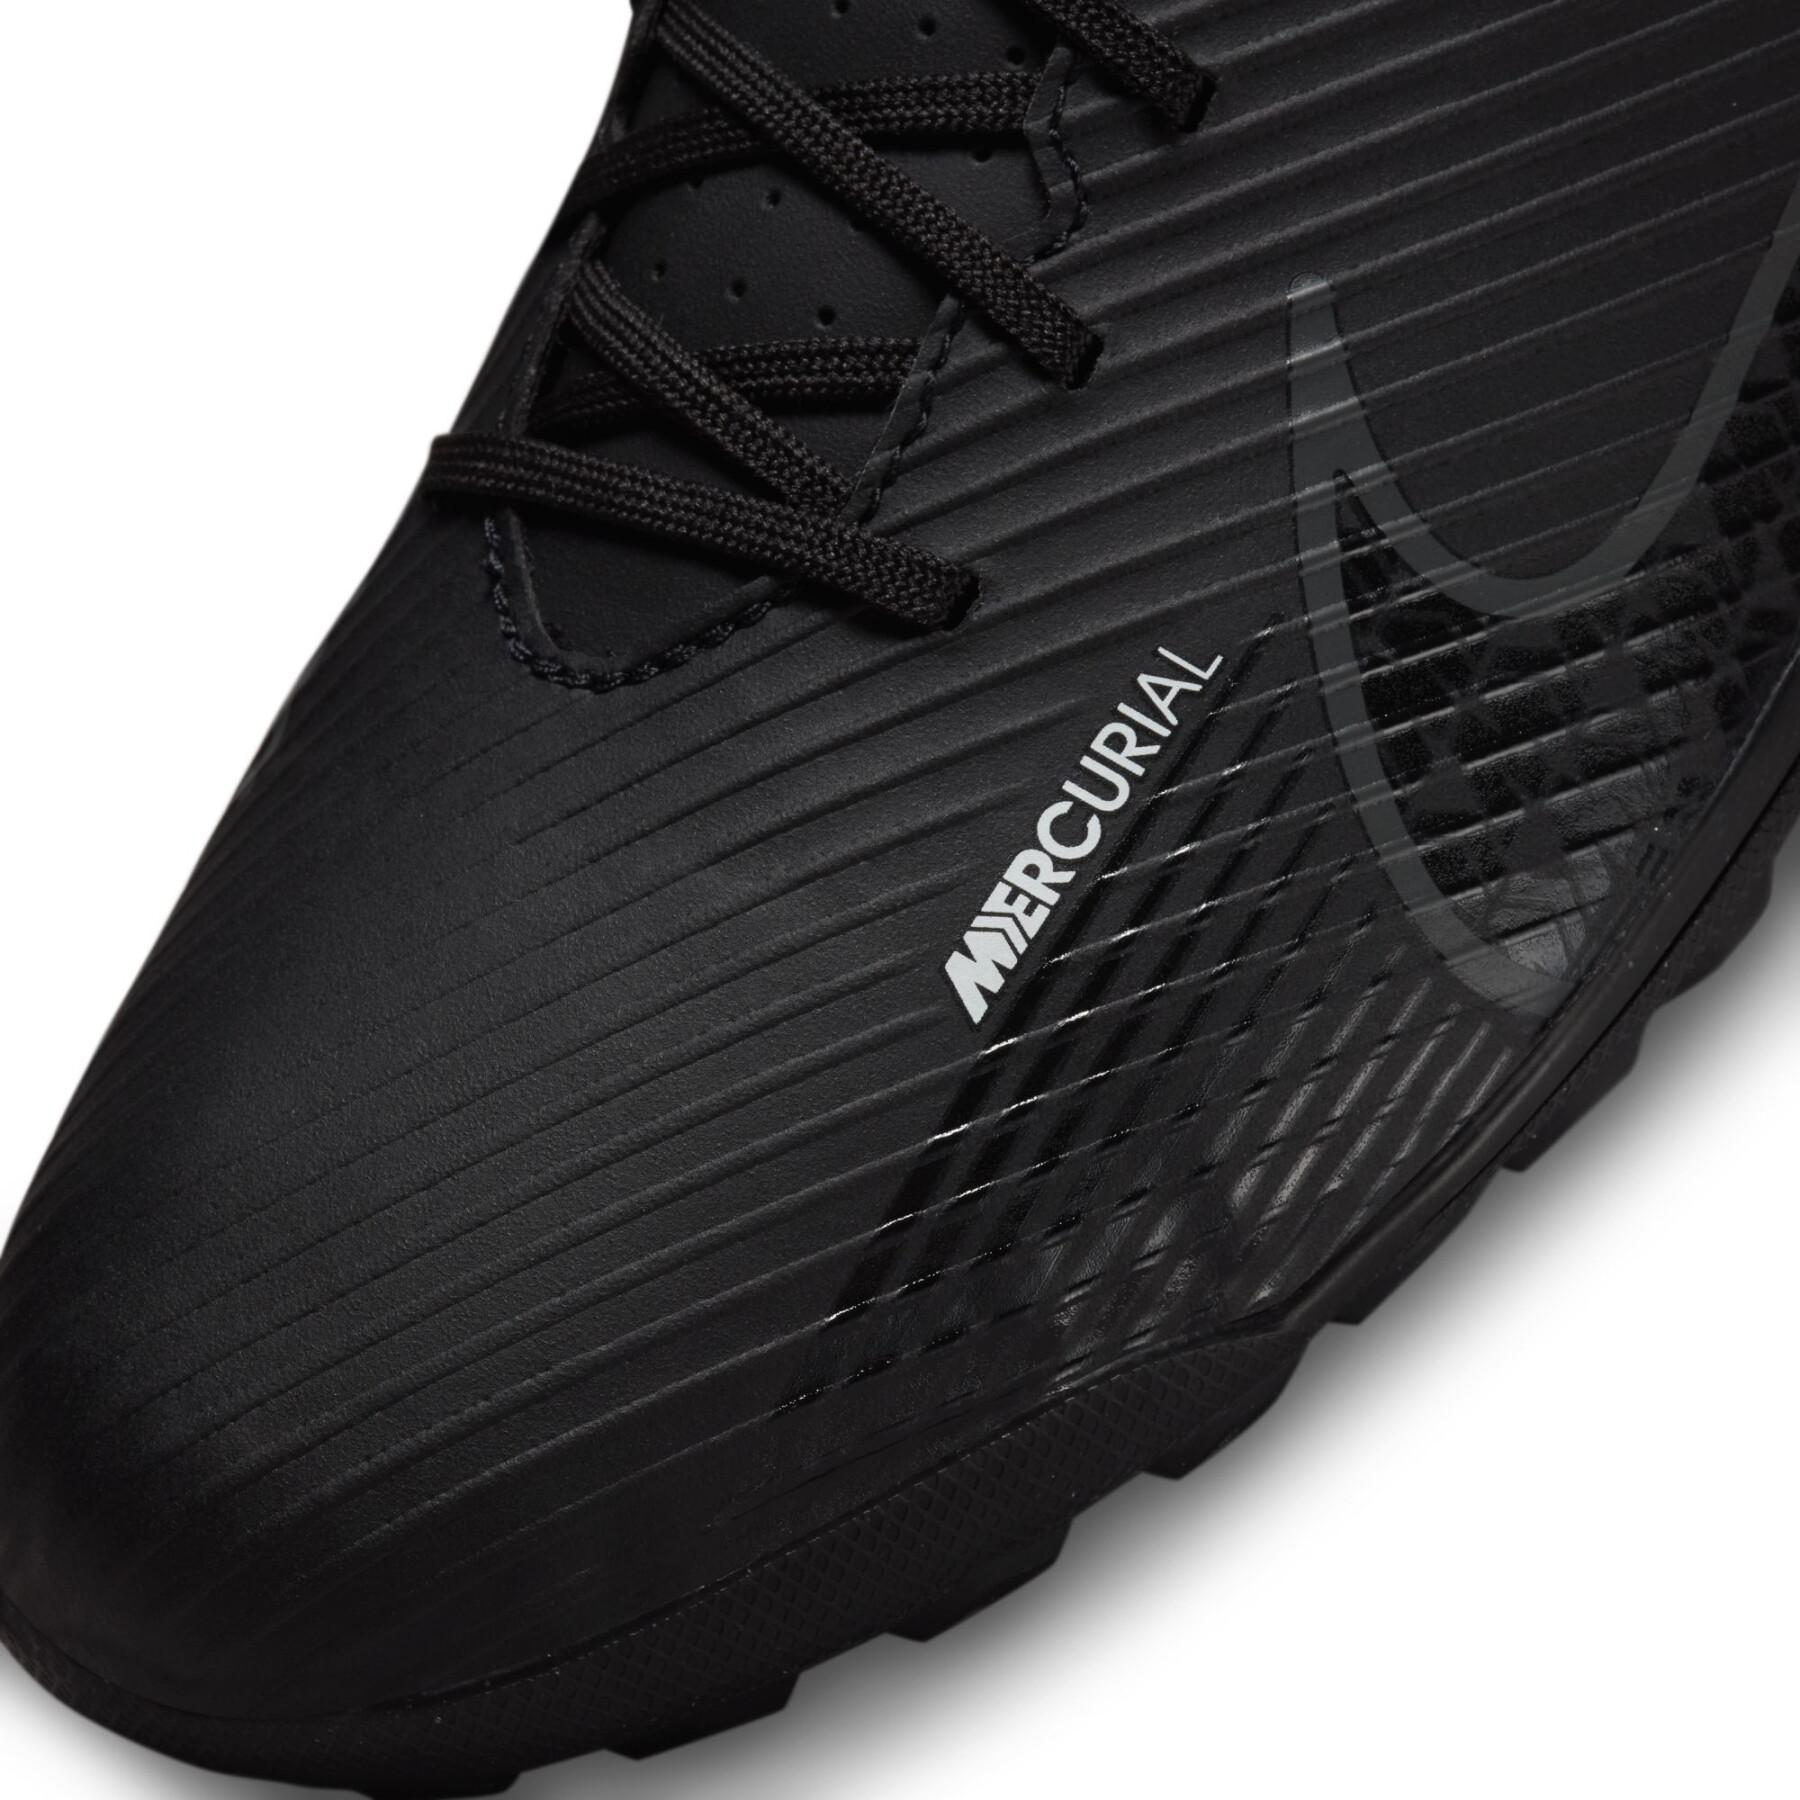 Voetbalschoenen Nike Mercurial Vapor 15 Club TF - Shadow Black Pack